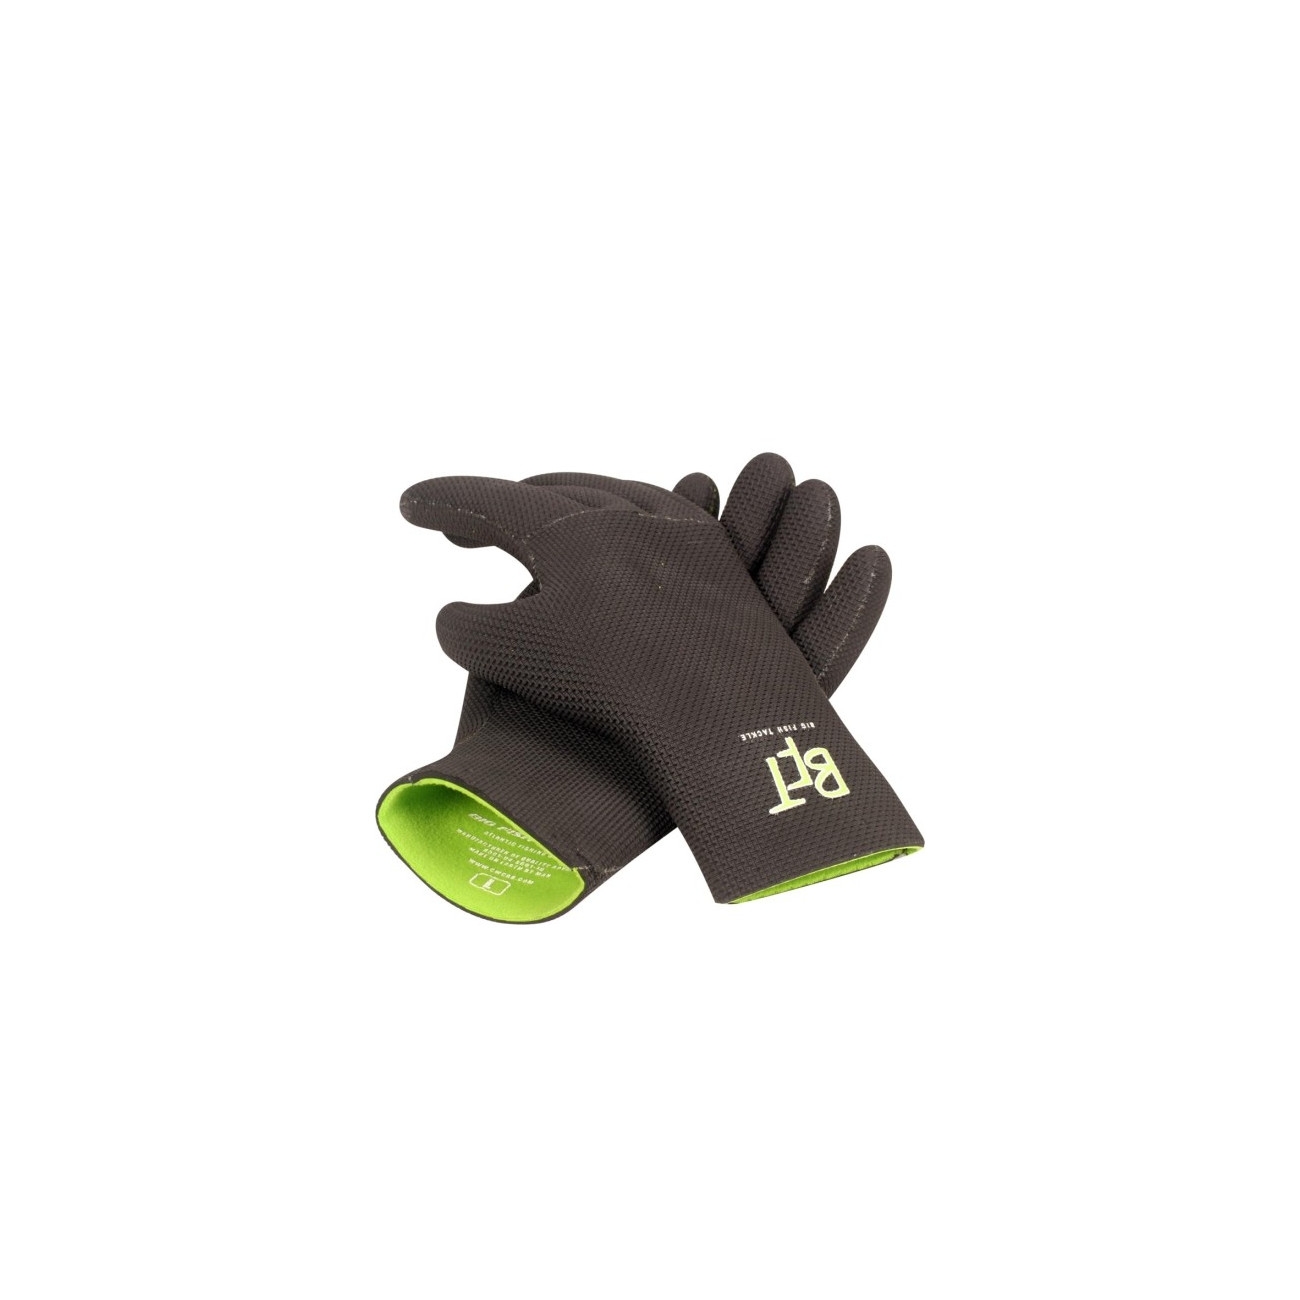 Köp dina BFT Atlantic Glove - XS på Mieko Fishing!